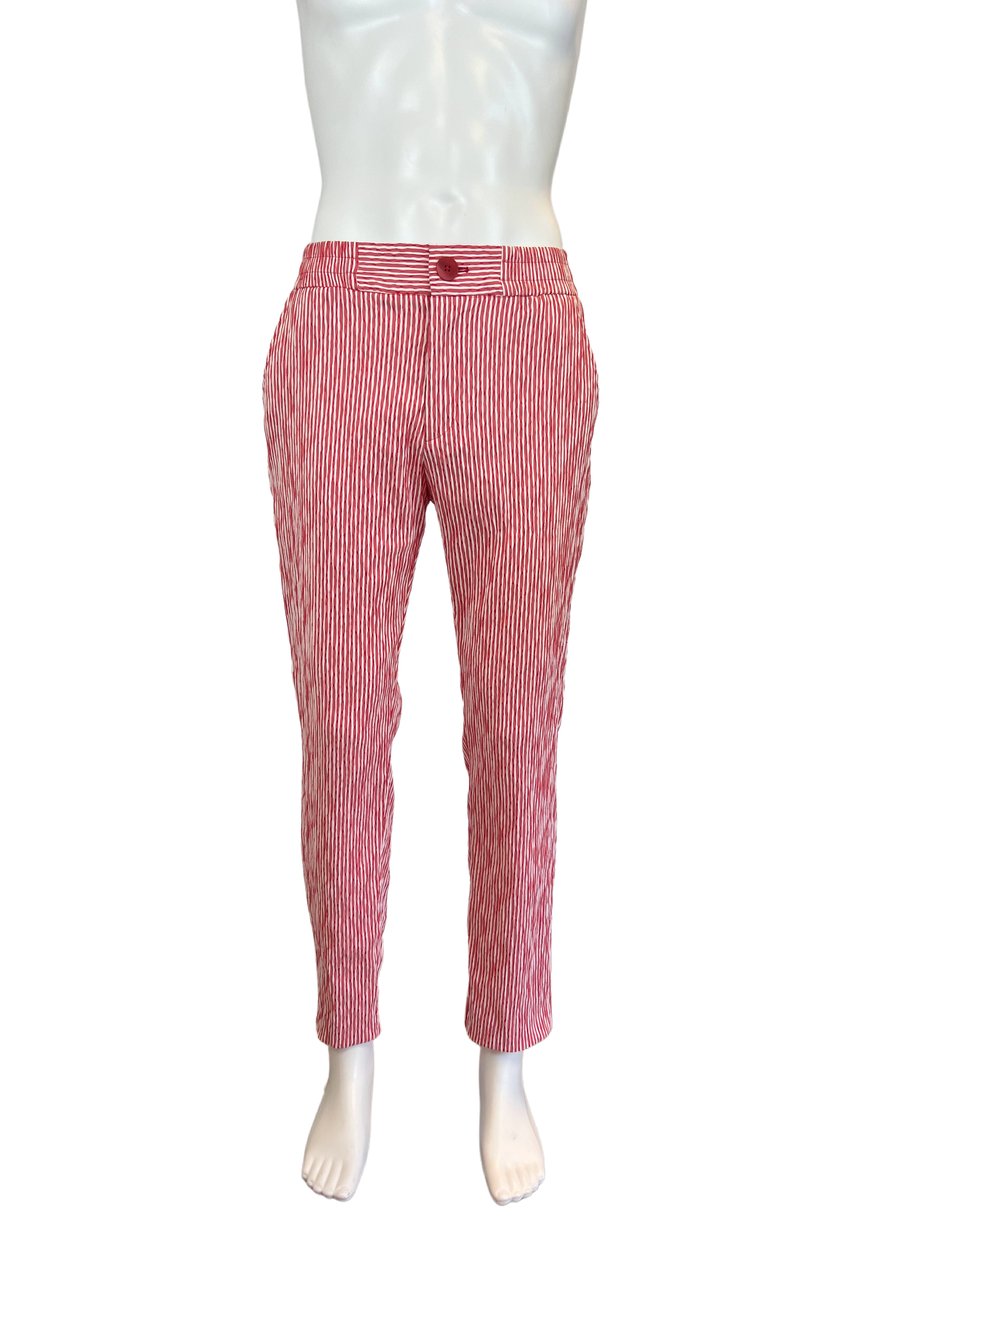 Red Stripe Trousers — Snider - New York Designer